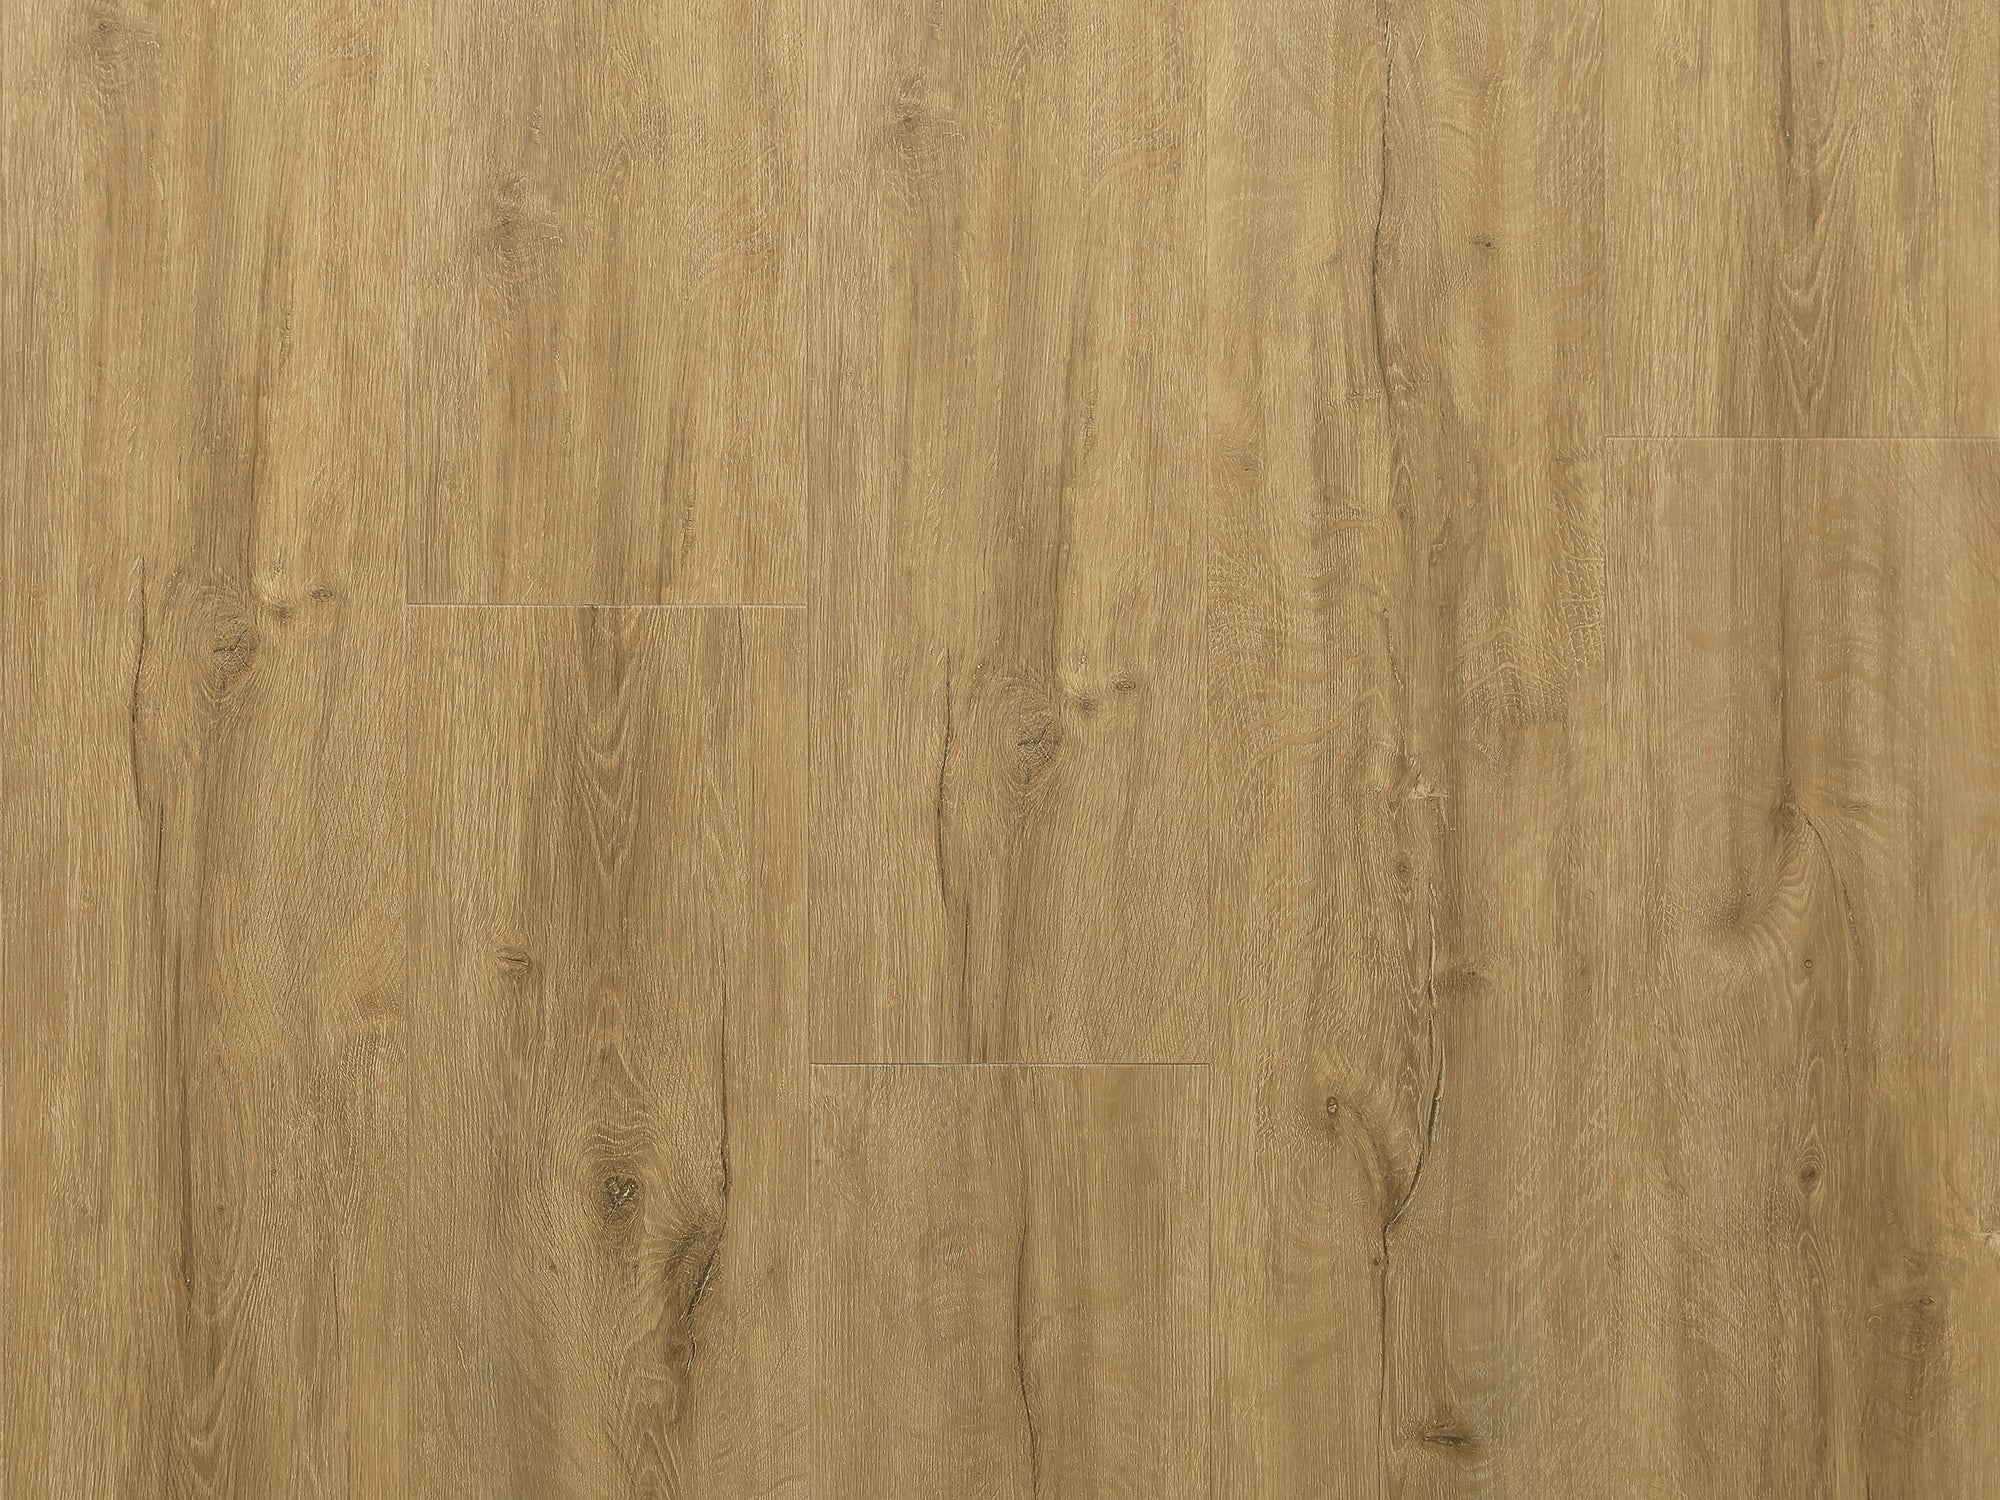 Stone Composite LVP Flooring - Natural Oak